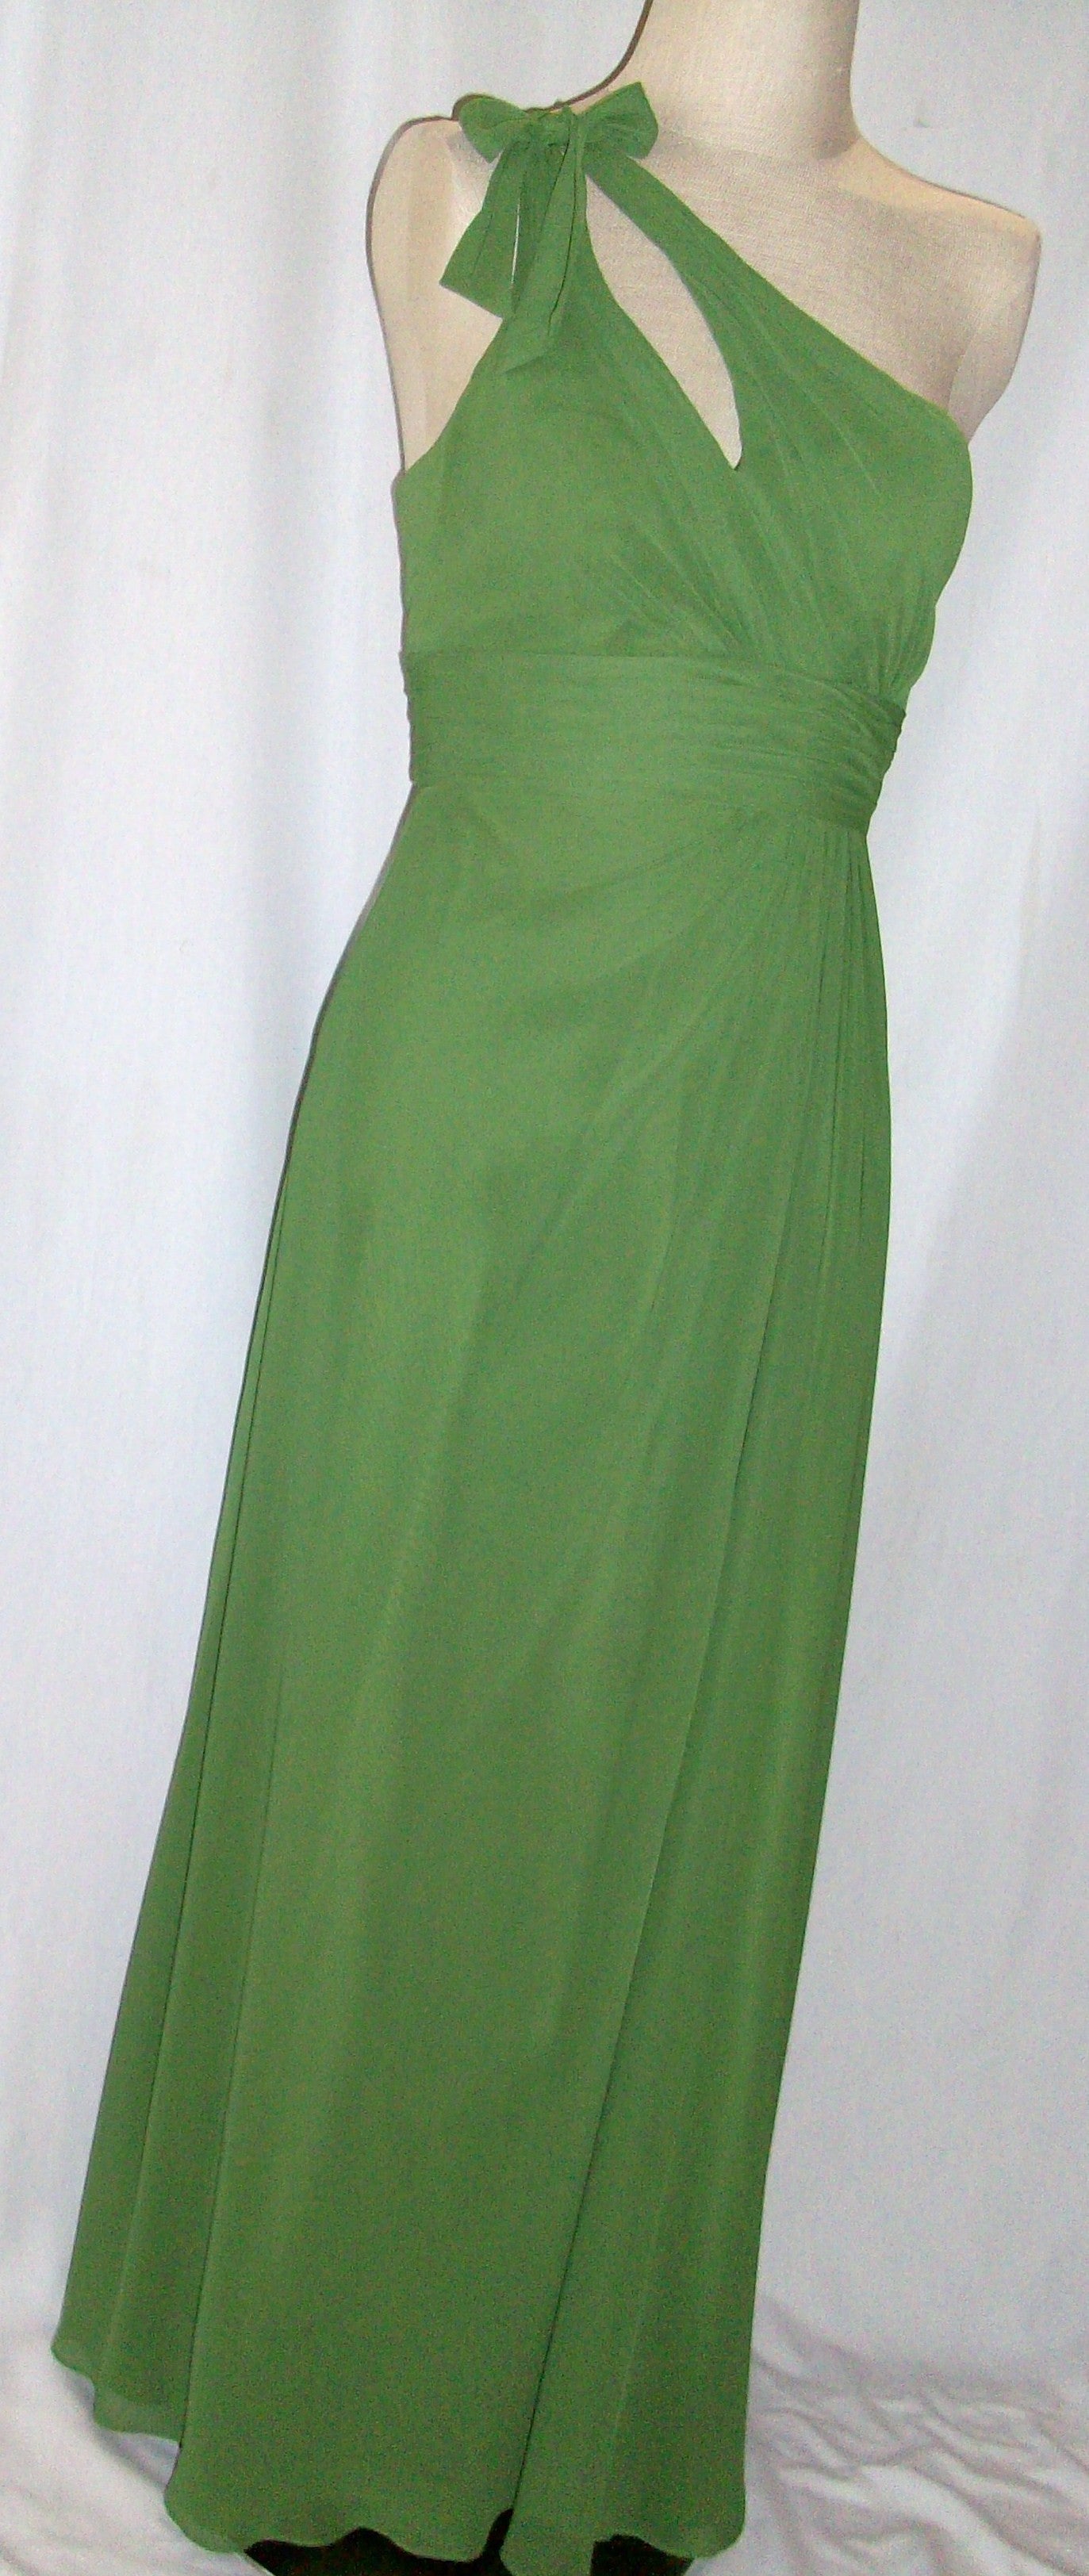 Olive Green "Liz Fields" Gown 330